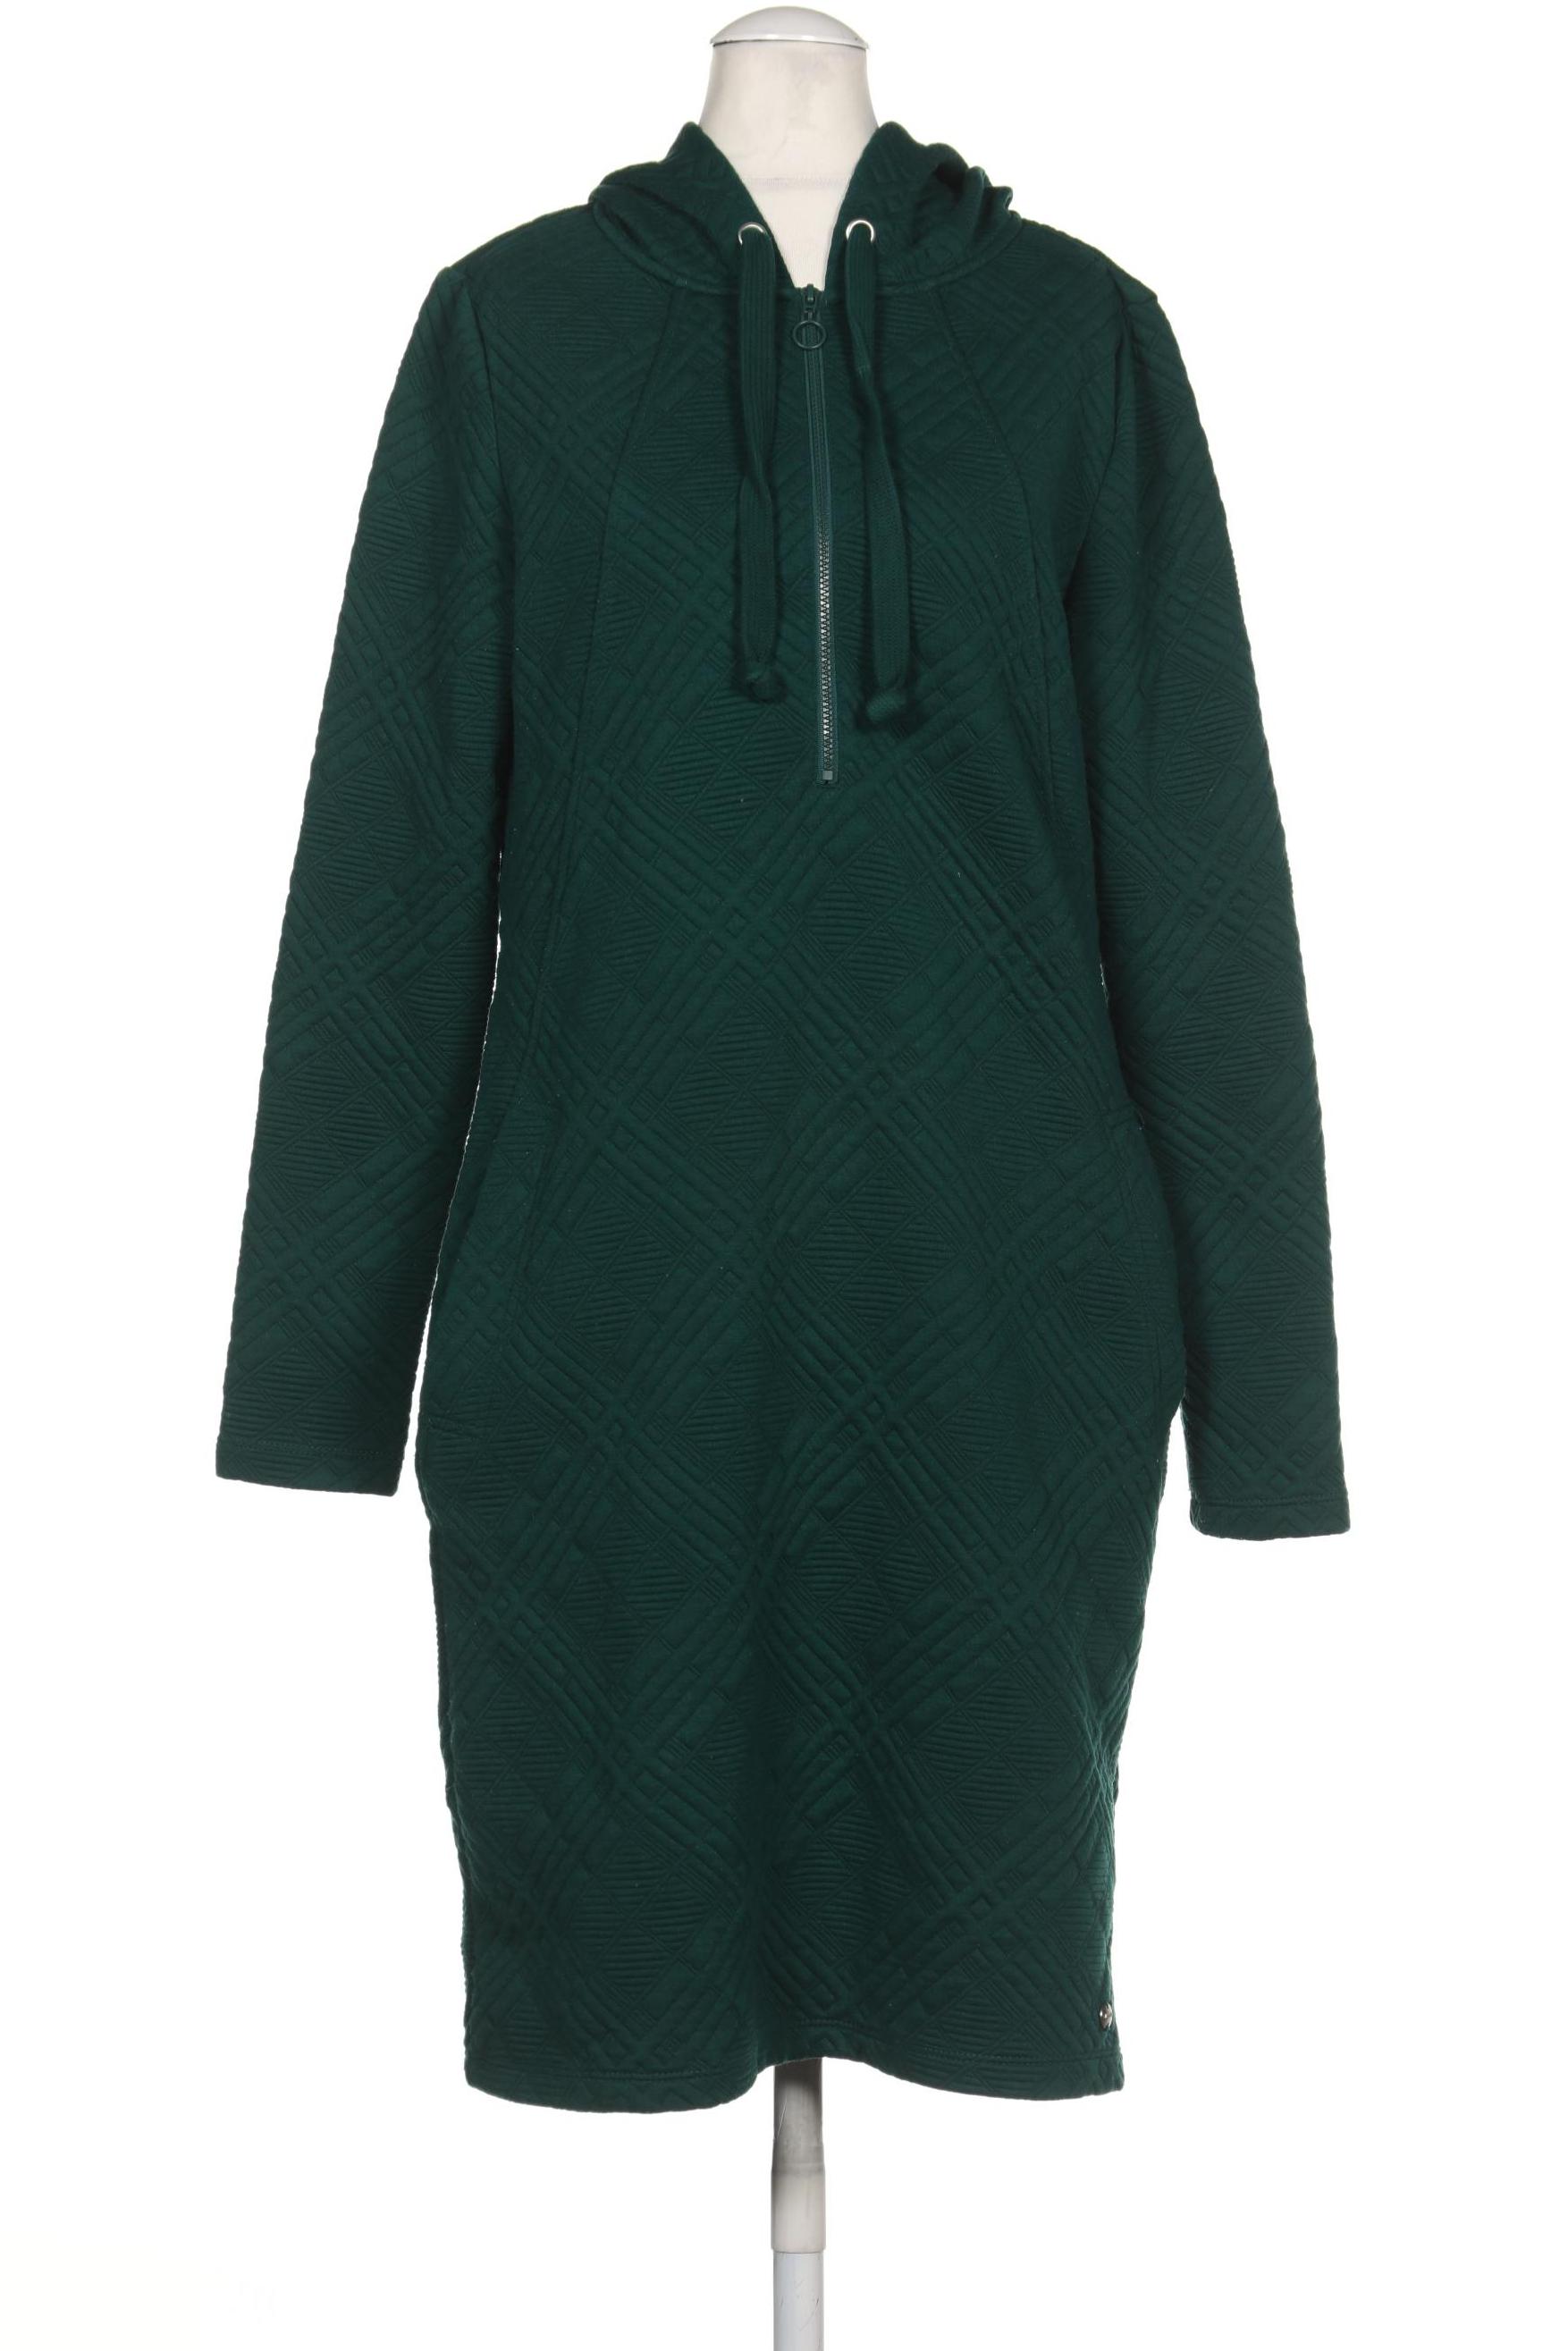 TAIFUN Damen Kleid, grün von Taifun